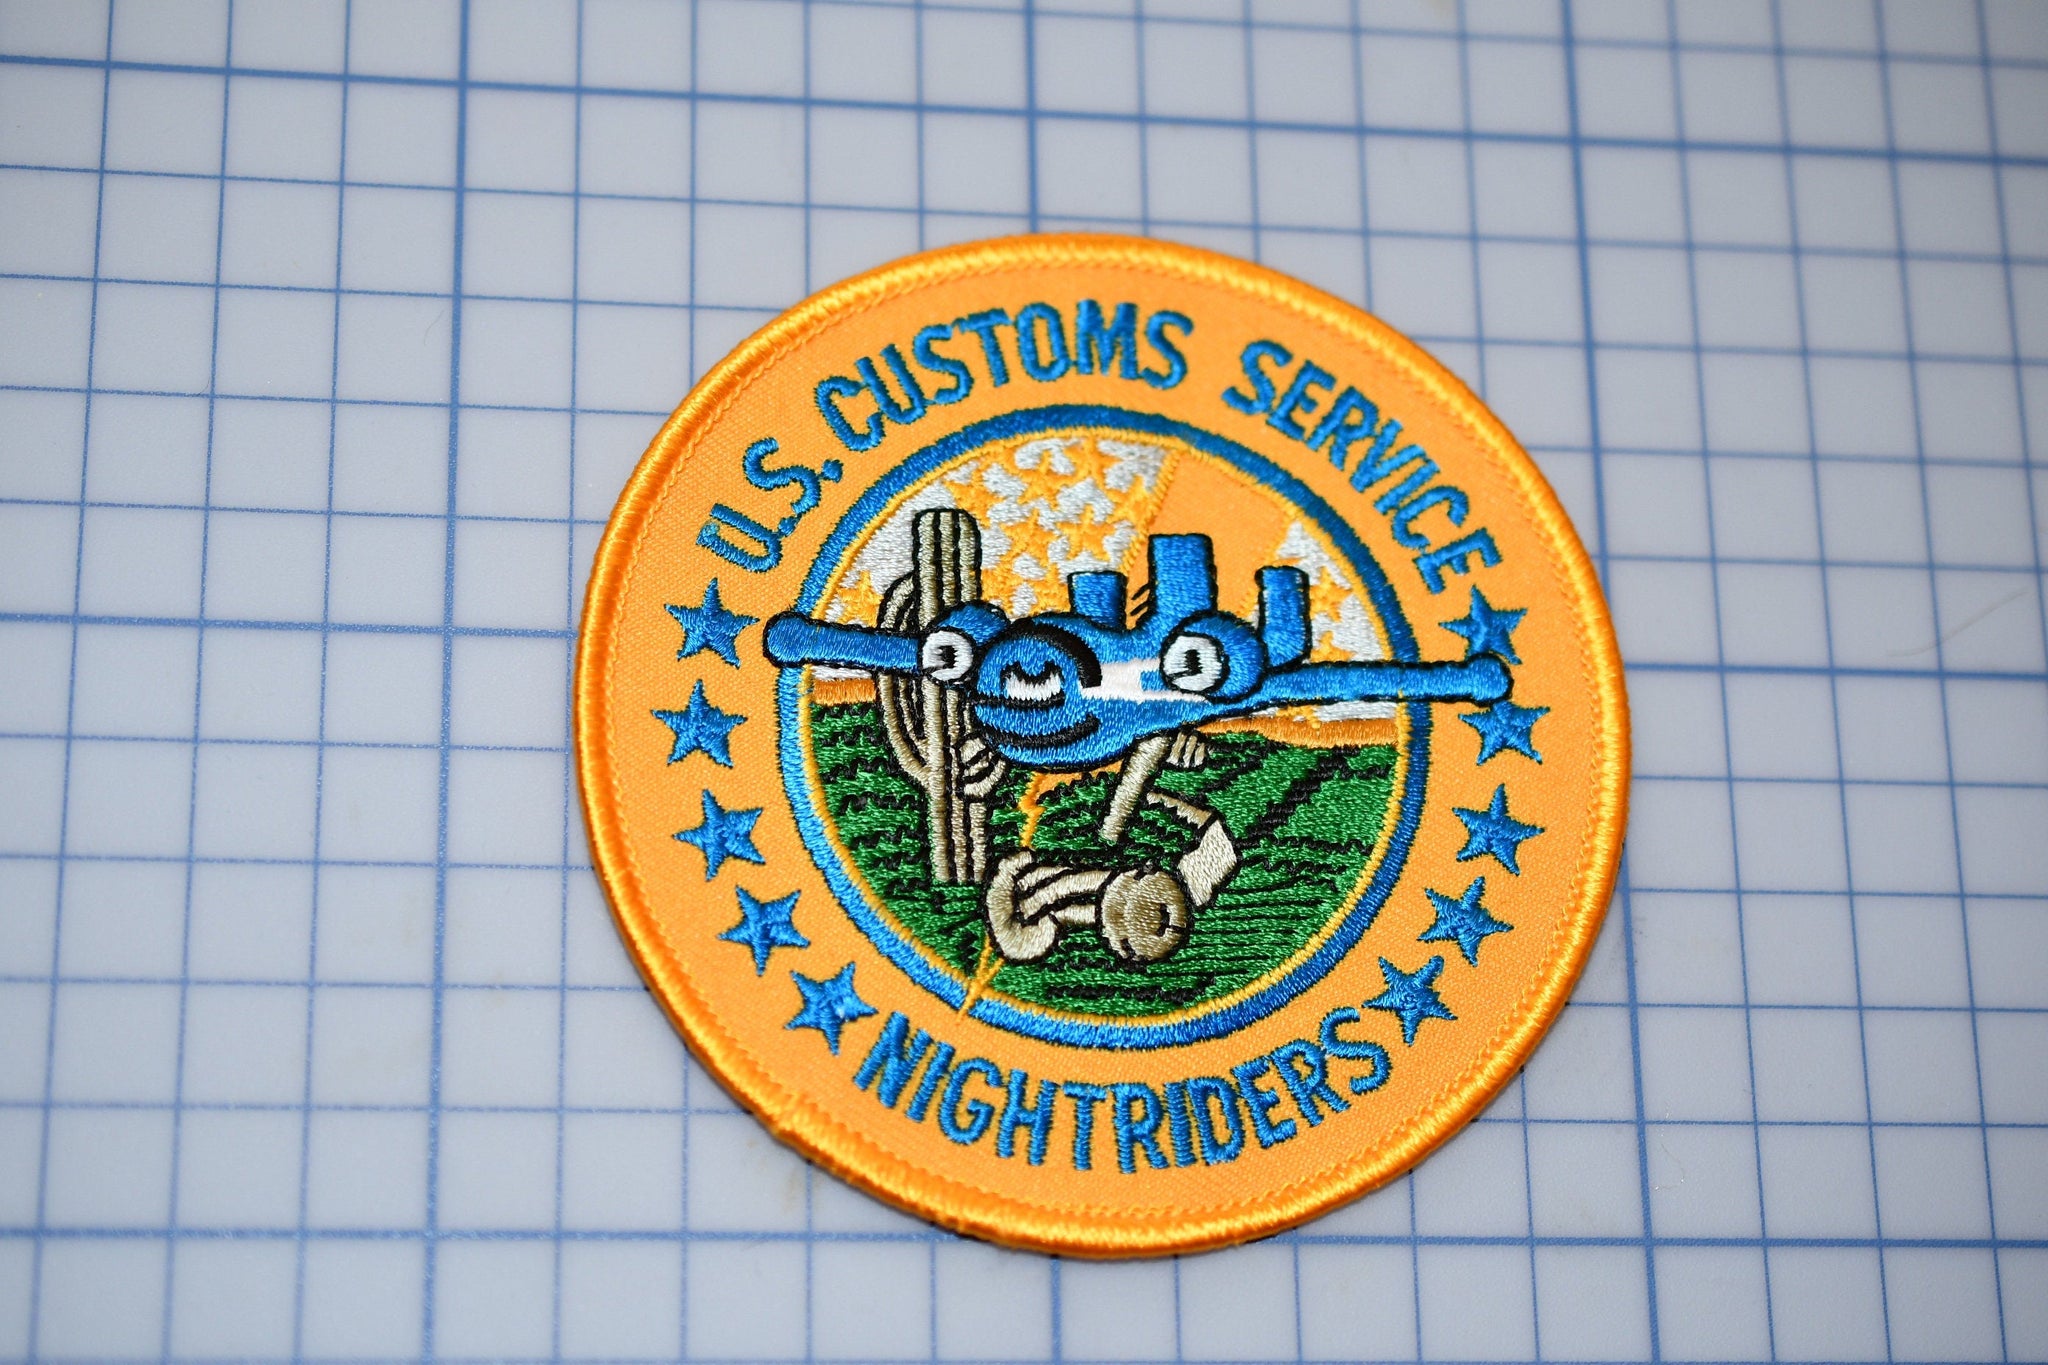 U.S. Customs Service "Nightriders" Patch (S3-252)